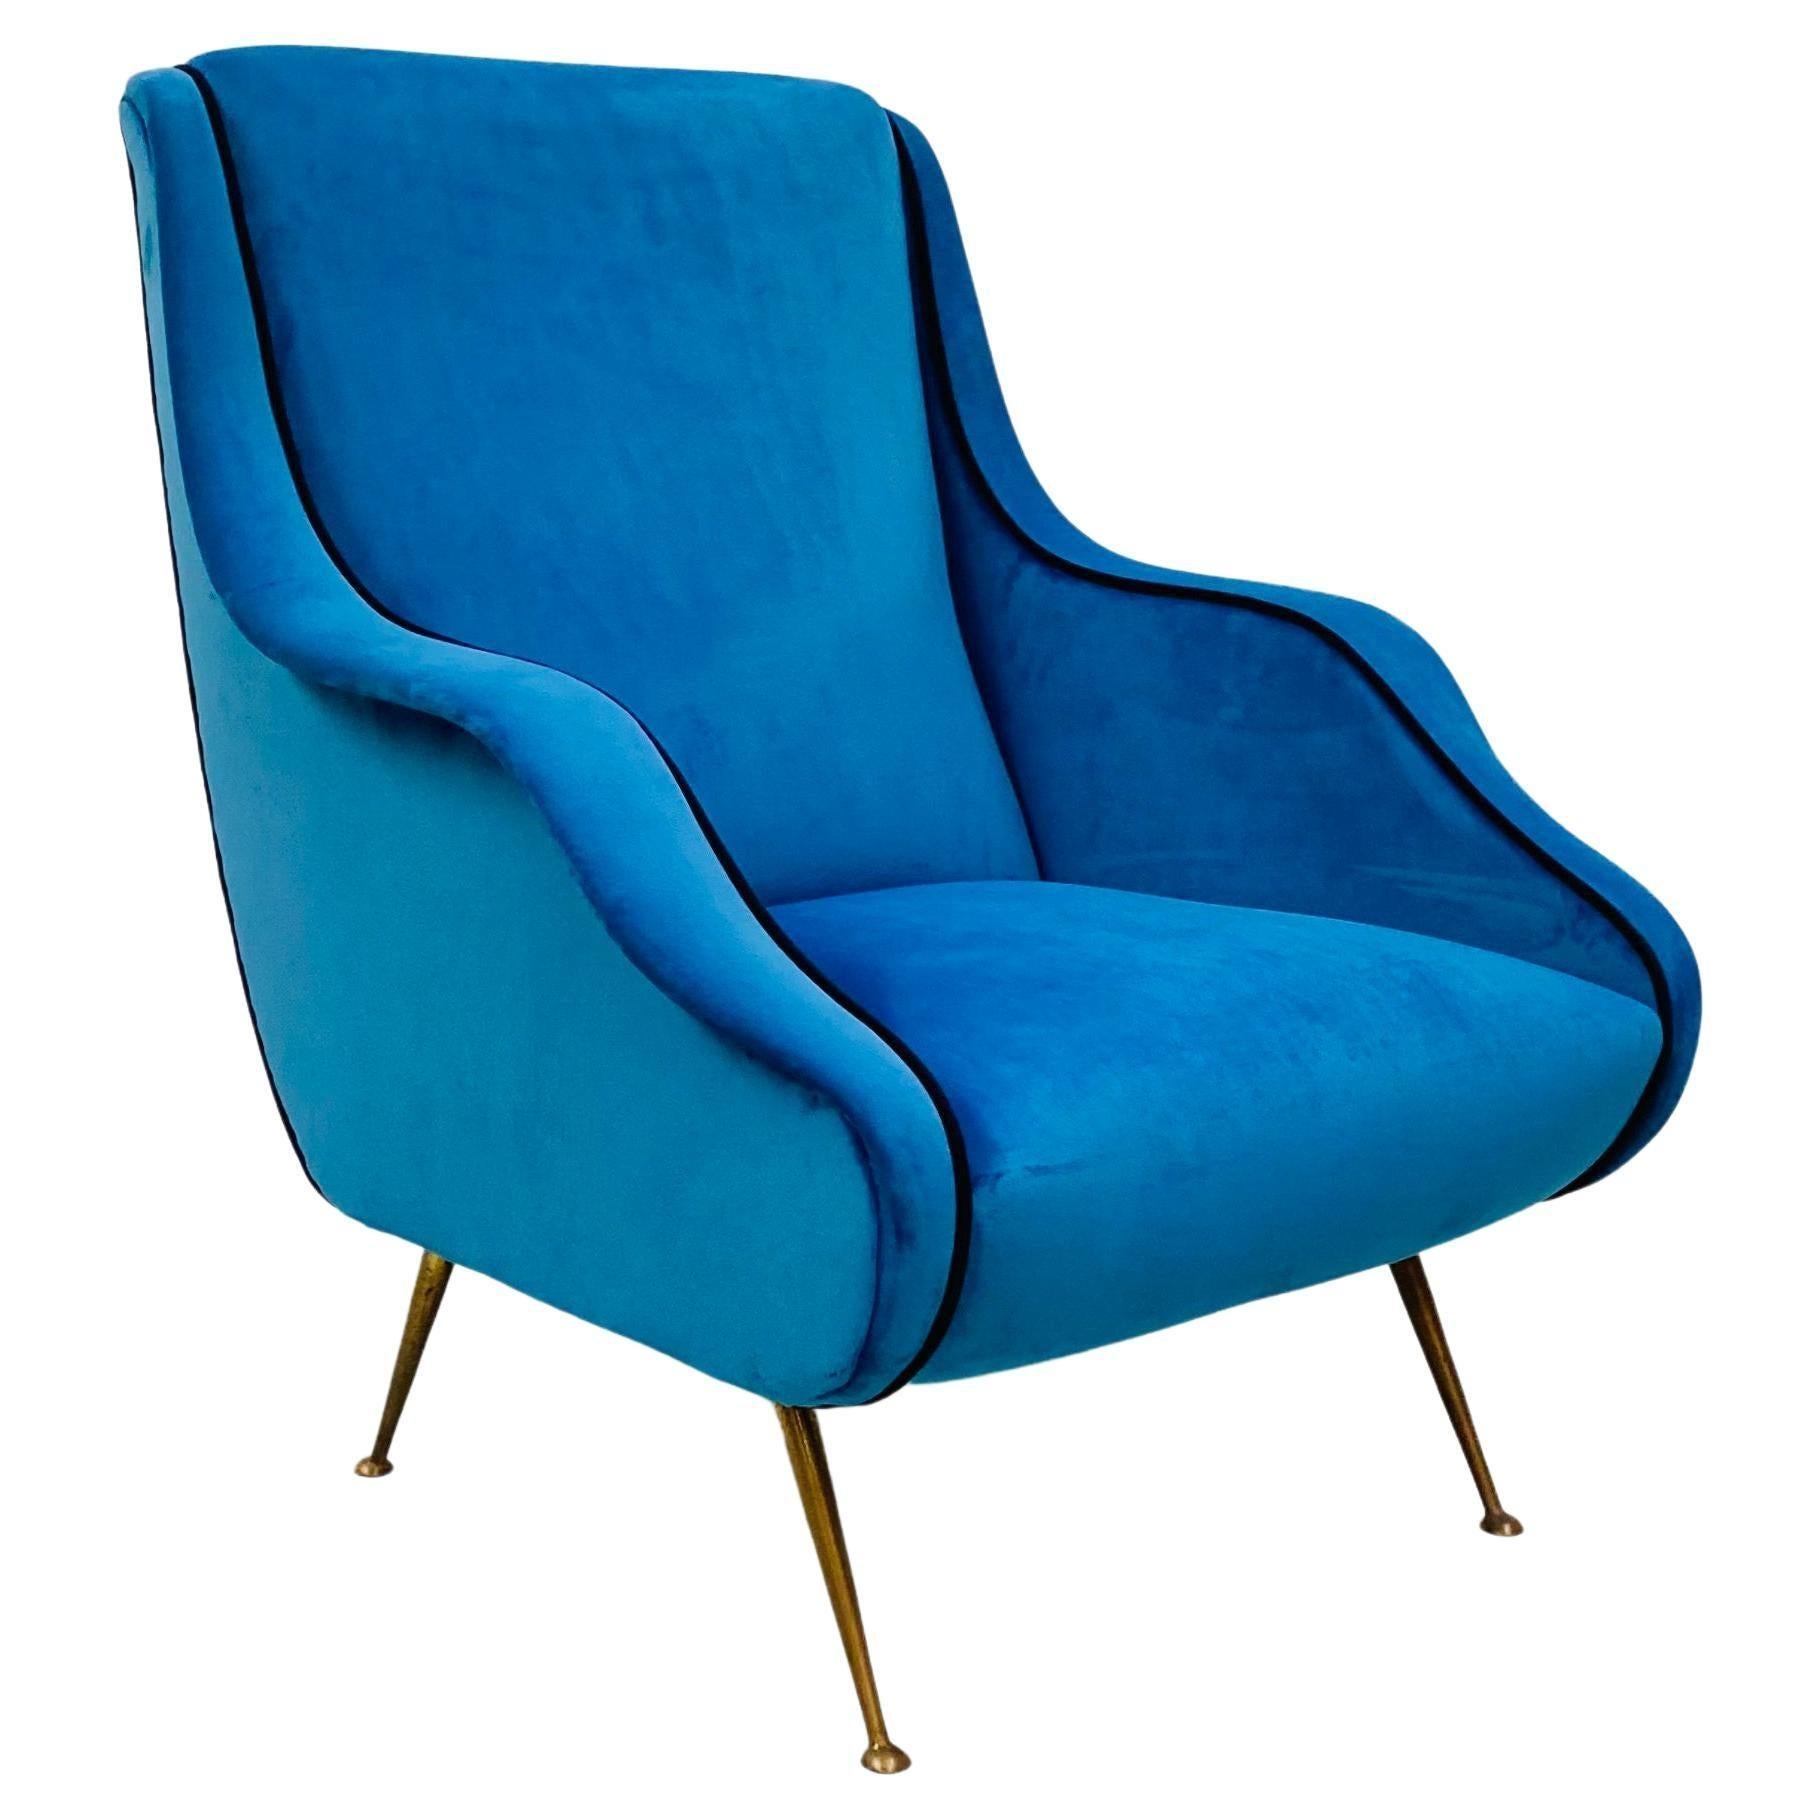 Vintage Italian Blue Velvet Armchair with Brass Legs by Carlo de Carli, 1950s